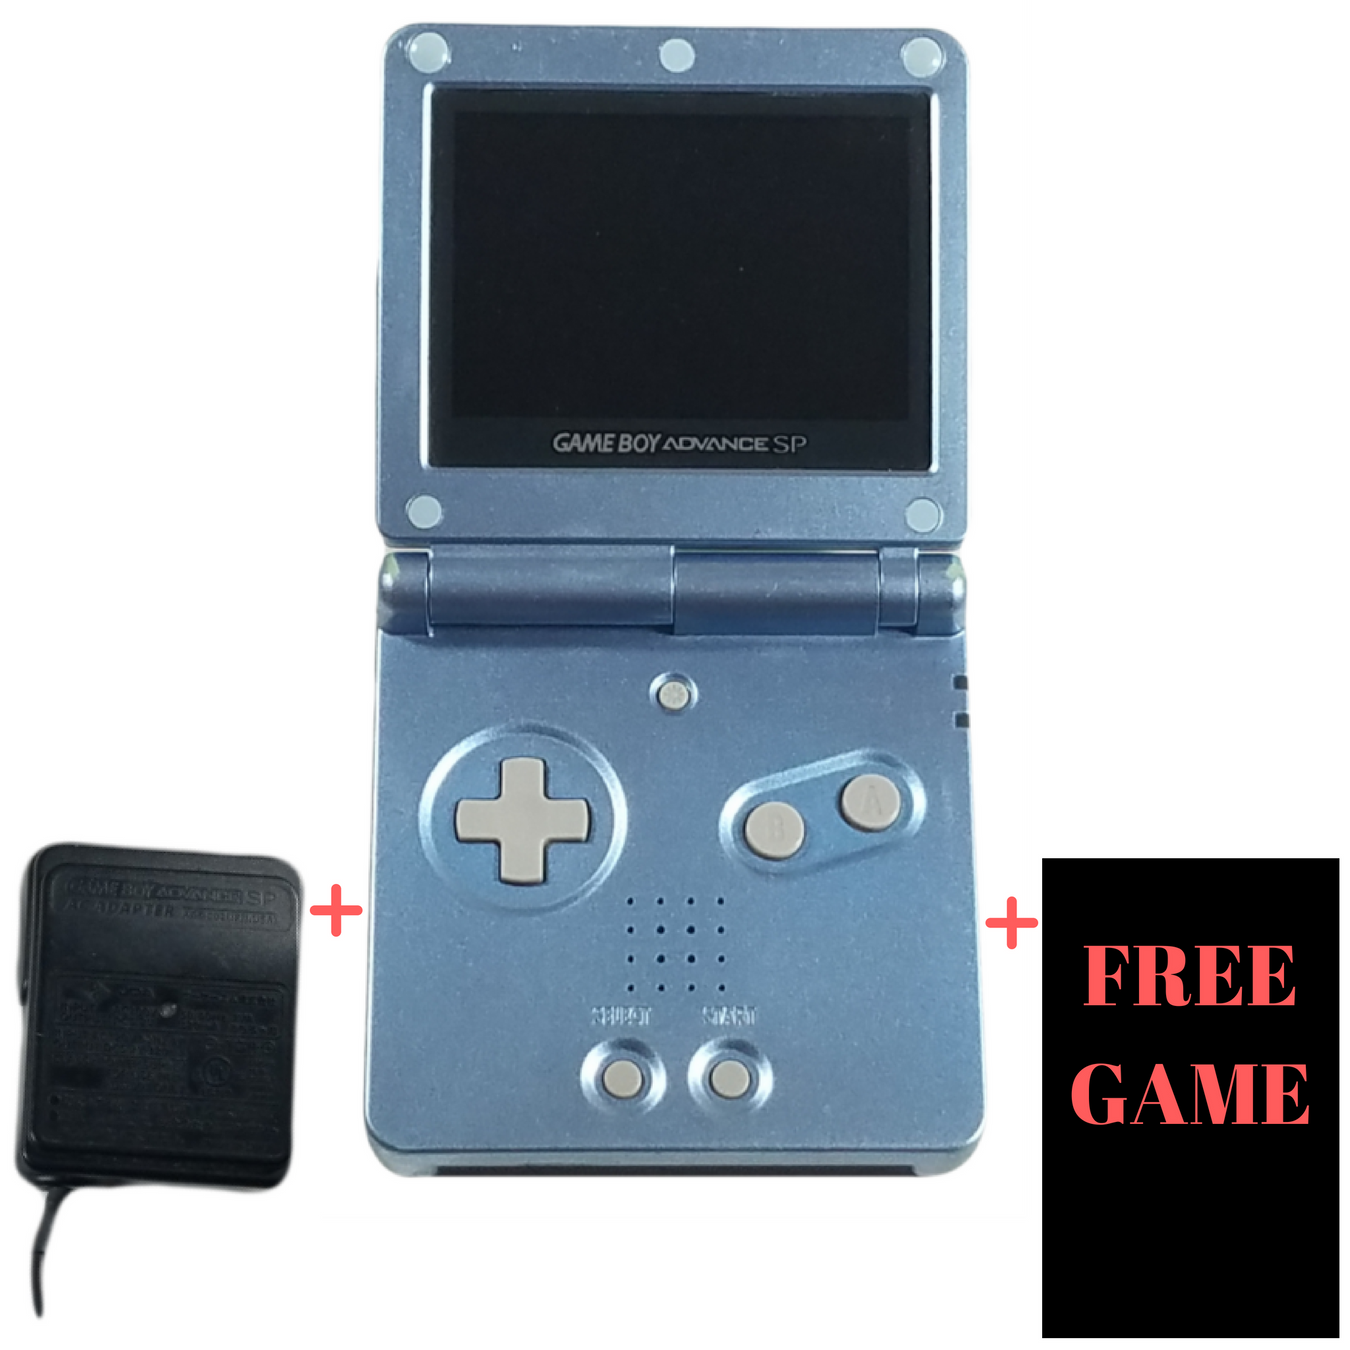 Game Boy Advance Consoles